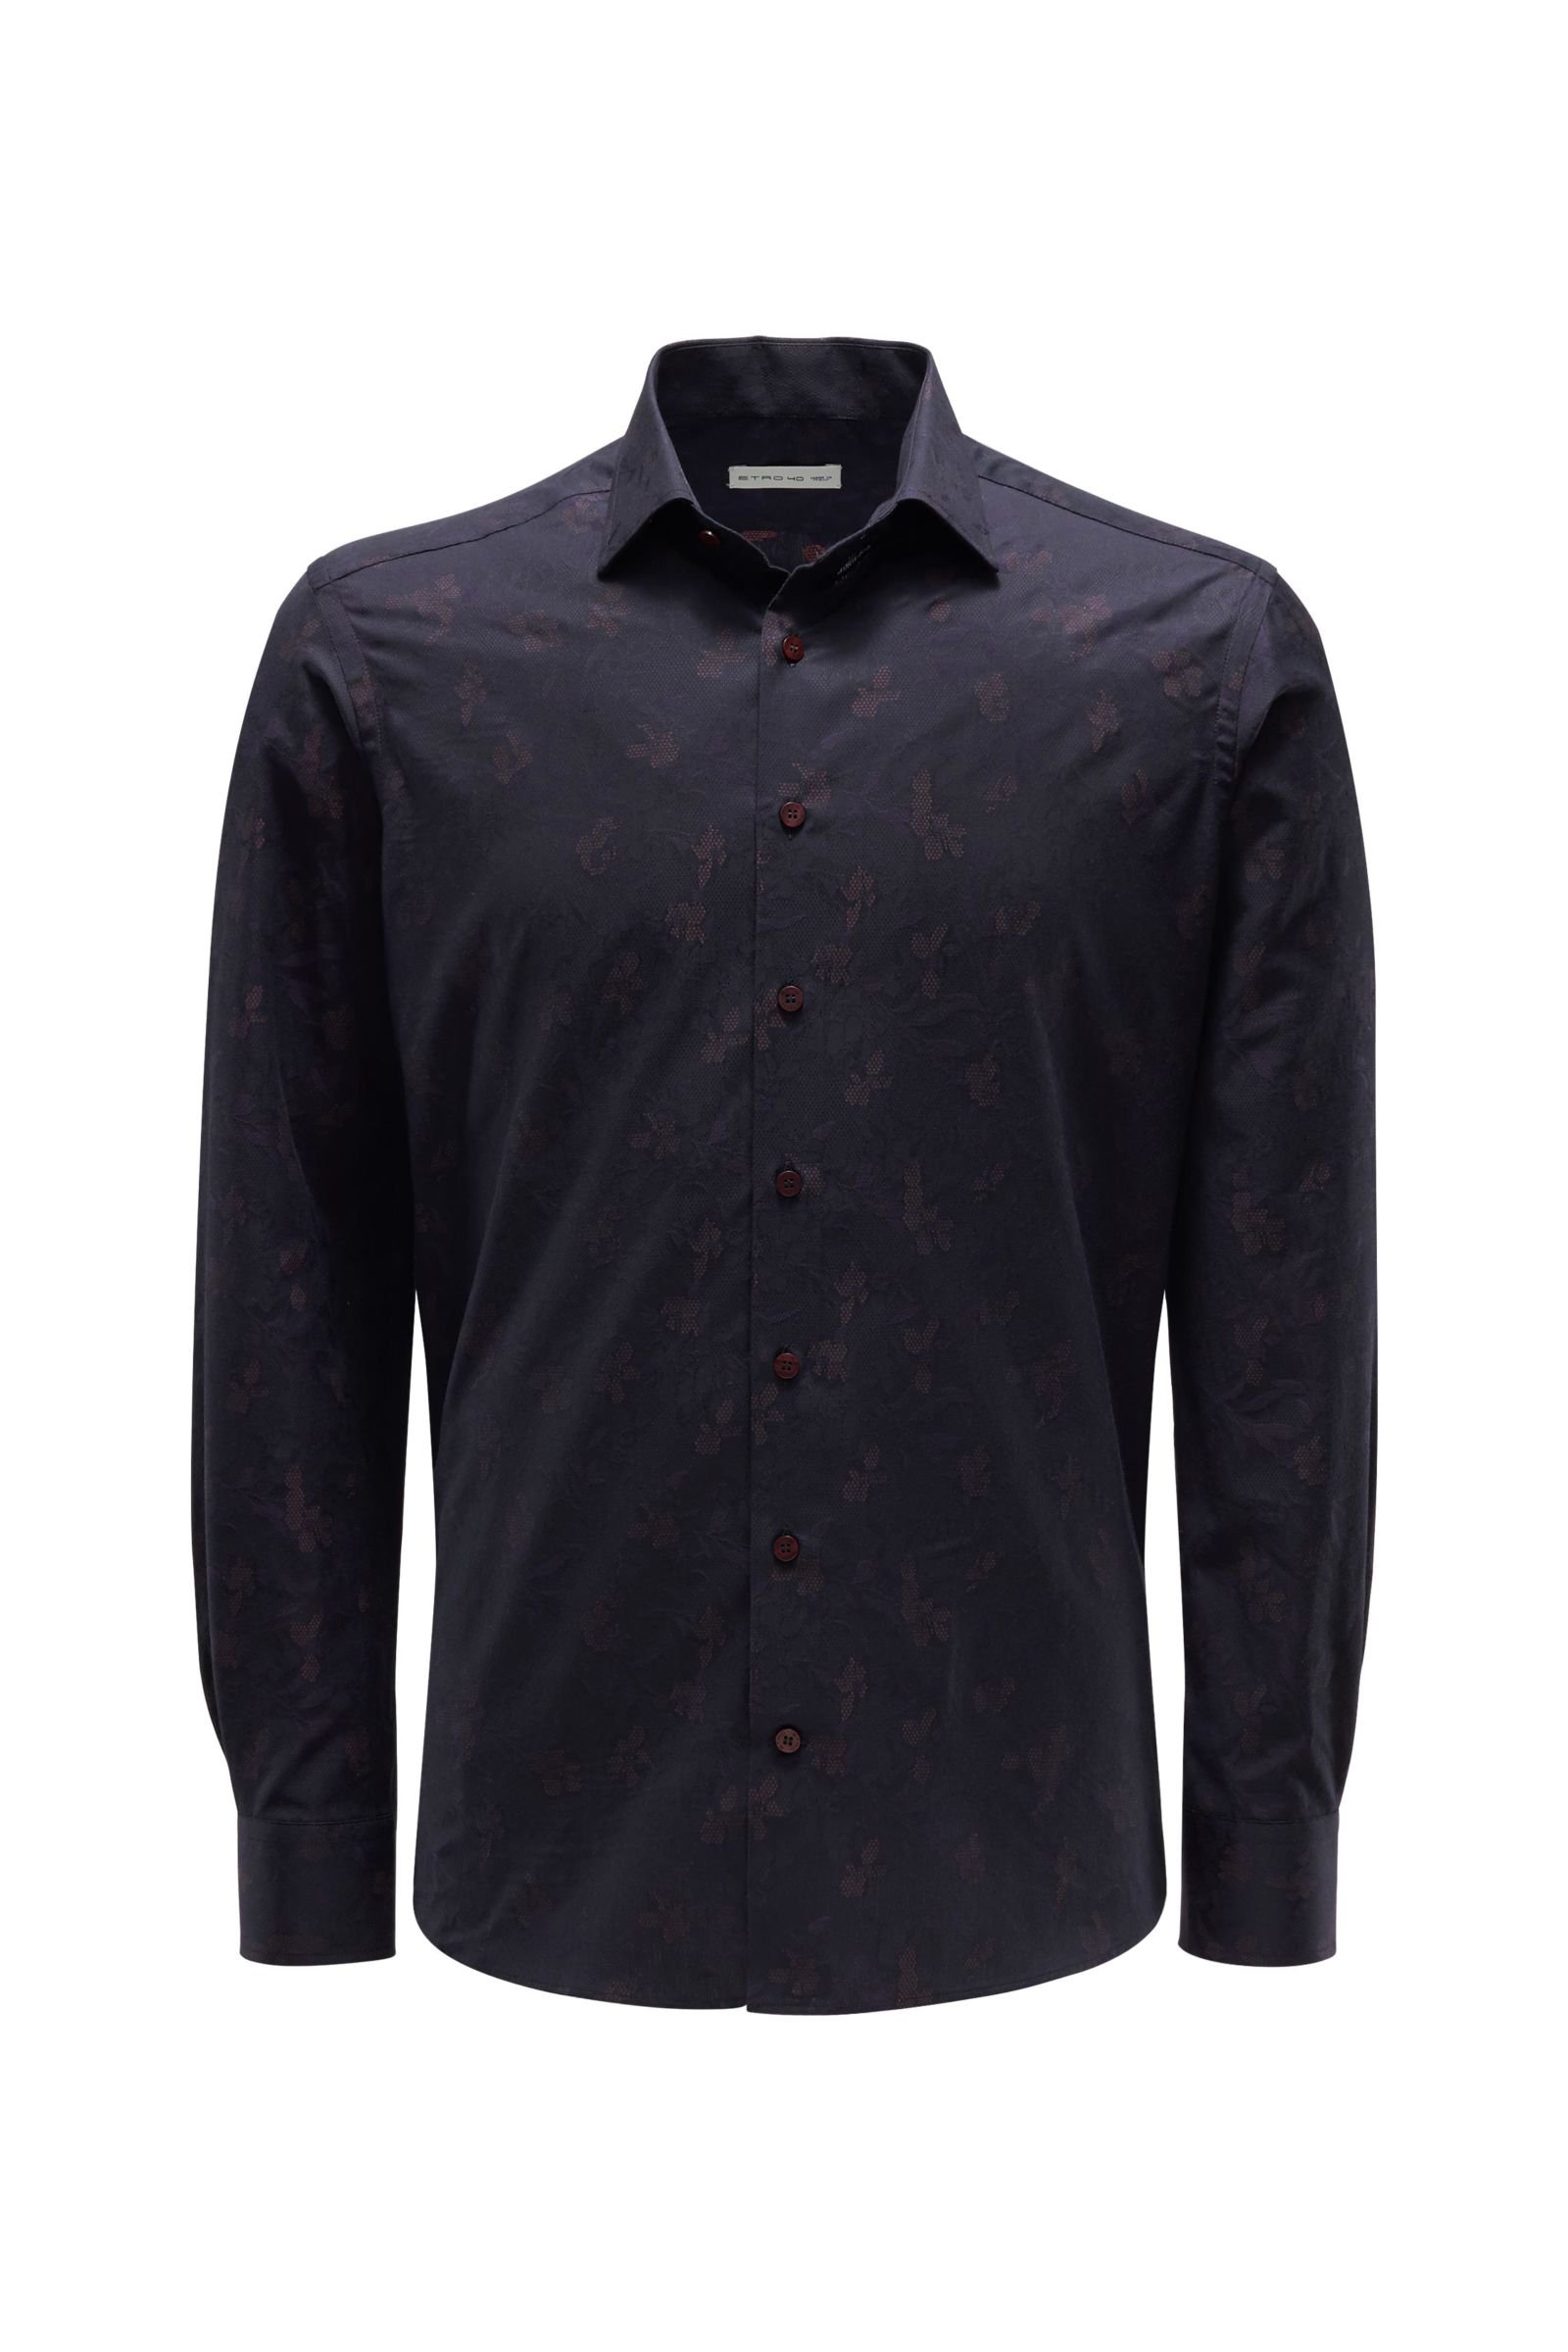 Jacquard shirt 'New Warrant' slim collar dark navy patterned